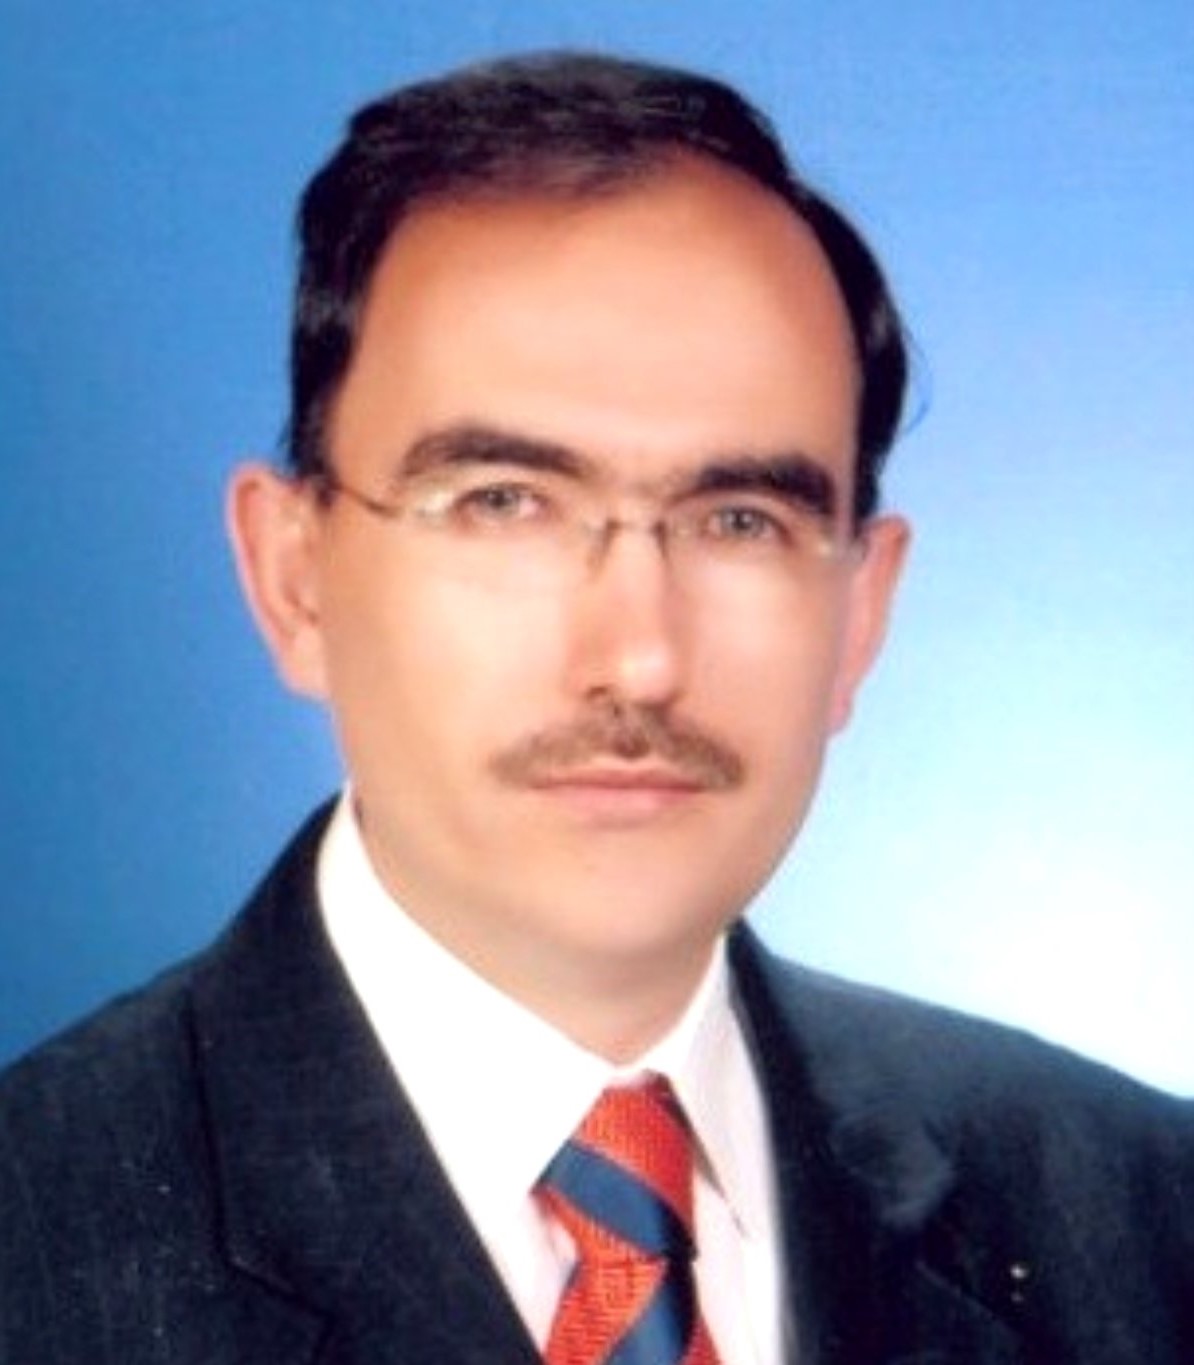 An image of Şükrü Beydemir